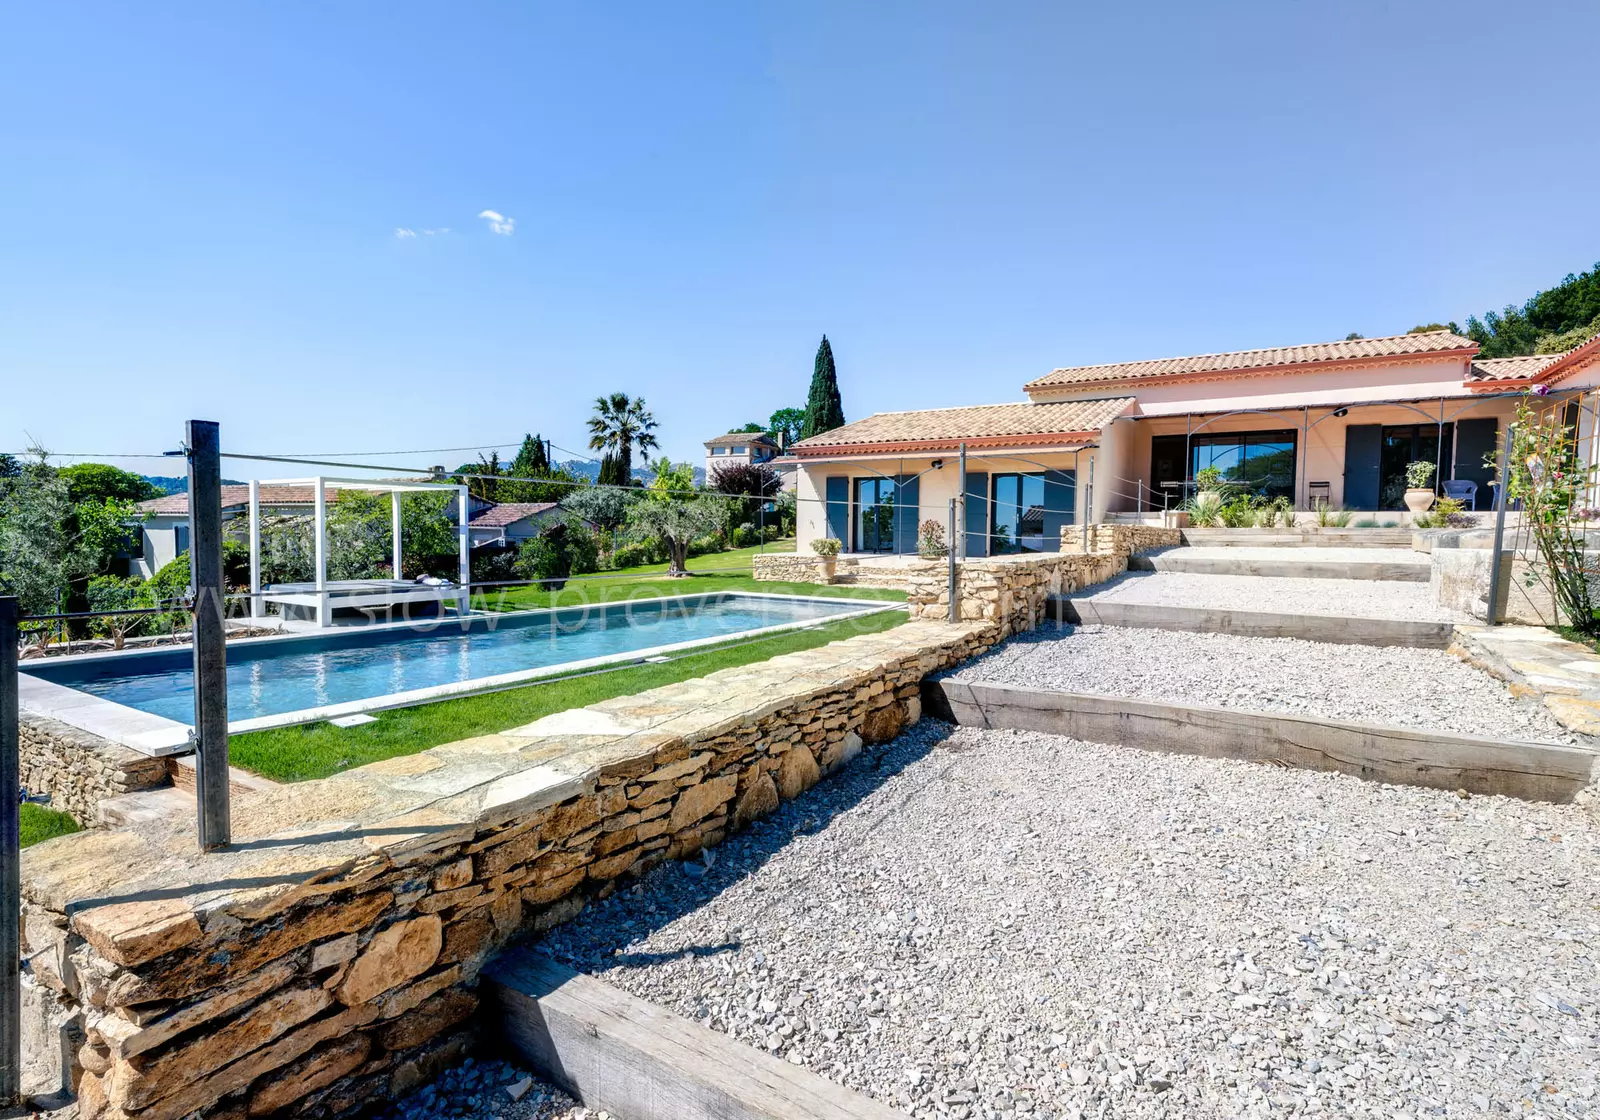 Beautiful villa with private swimming pool